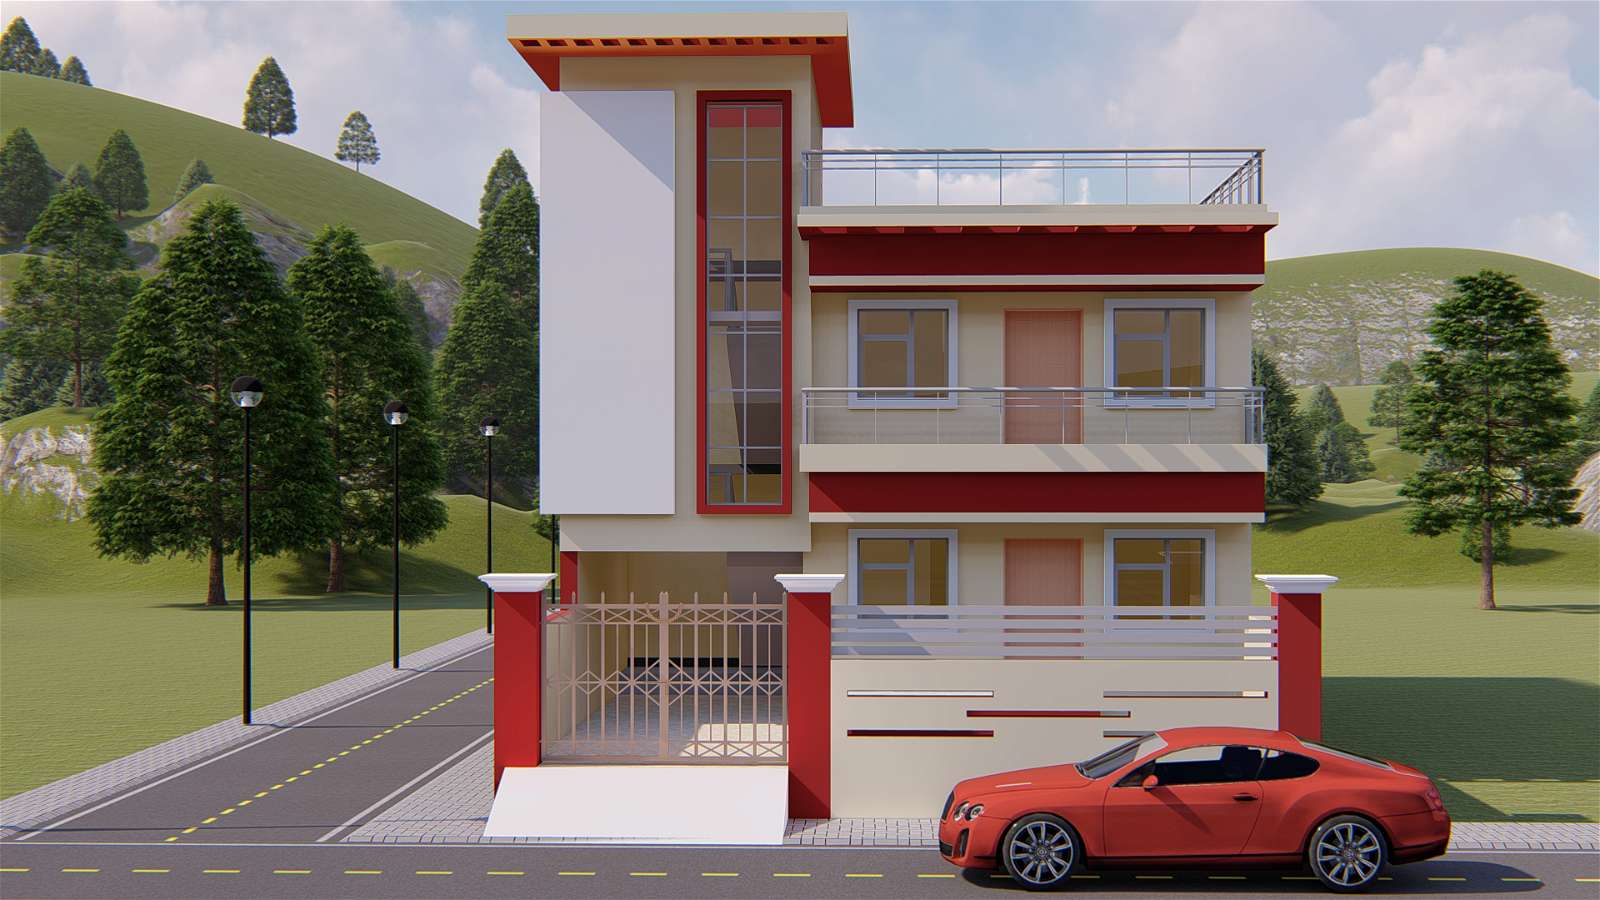 G+1 3d house Front elevation design Revit file. Download this ...